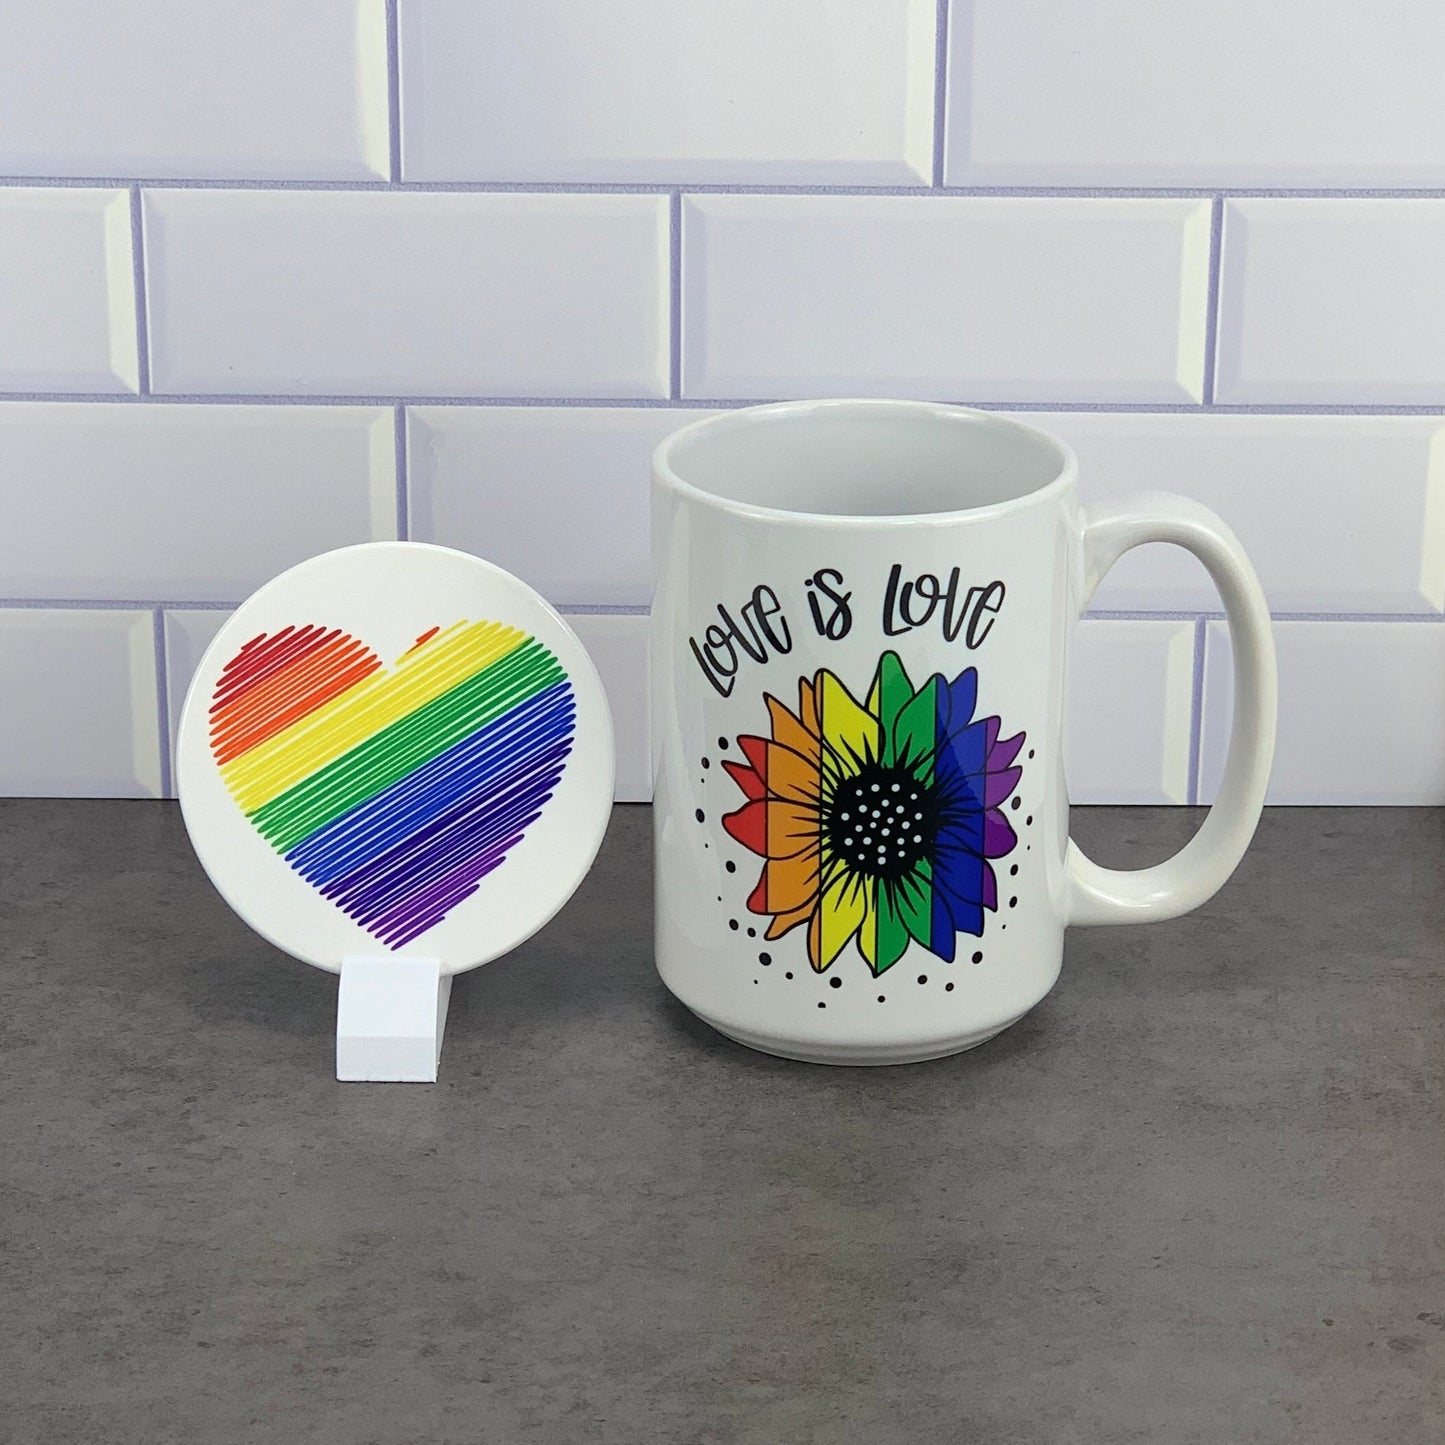 Love is love mug and coaster set